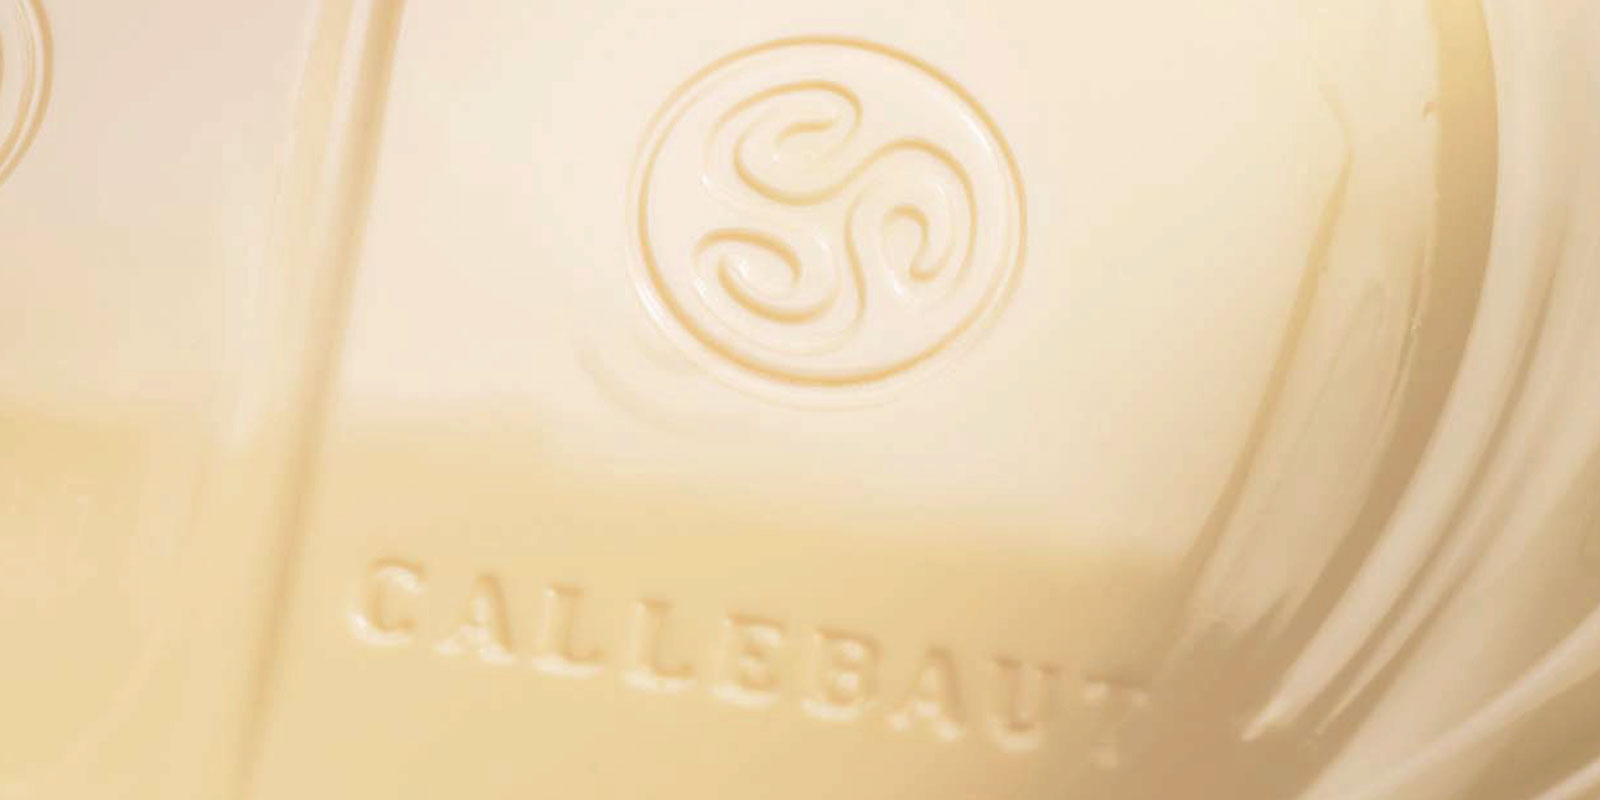 Bile cokolady od Callebaut Bila cokolada je vysledkem smichani kakaoveho masla, suseneho mleka a cukru. Pomer michani techto slozek - napriklad vanillin, vanilka nebo lecitin - urcuje chut konecneho produktu.